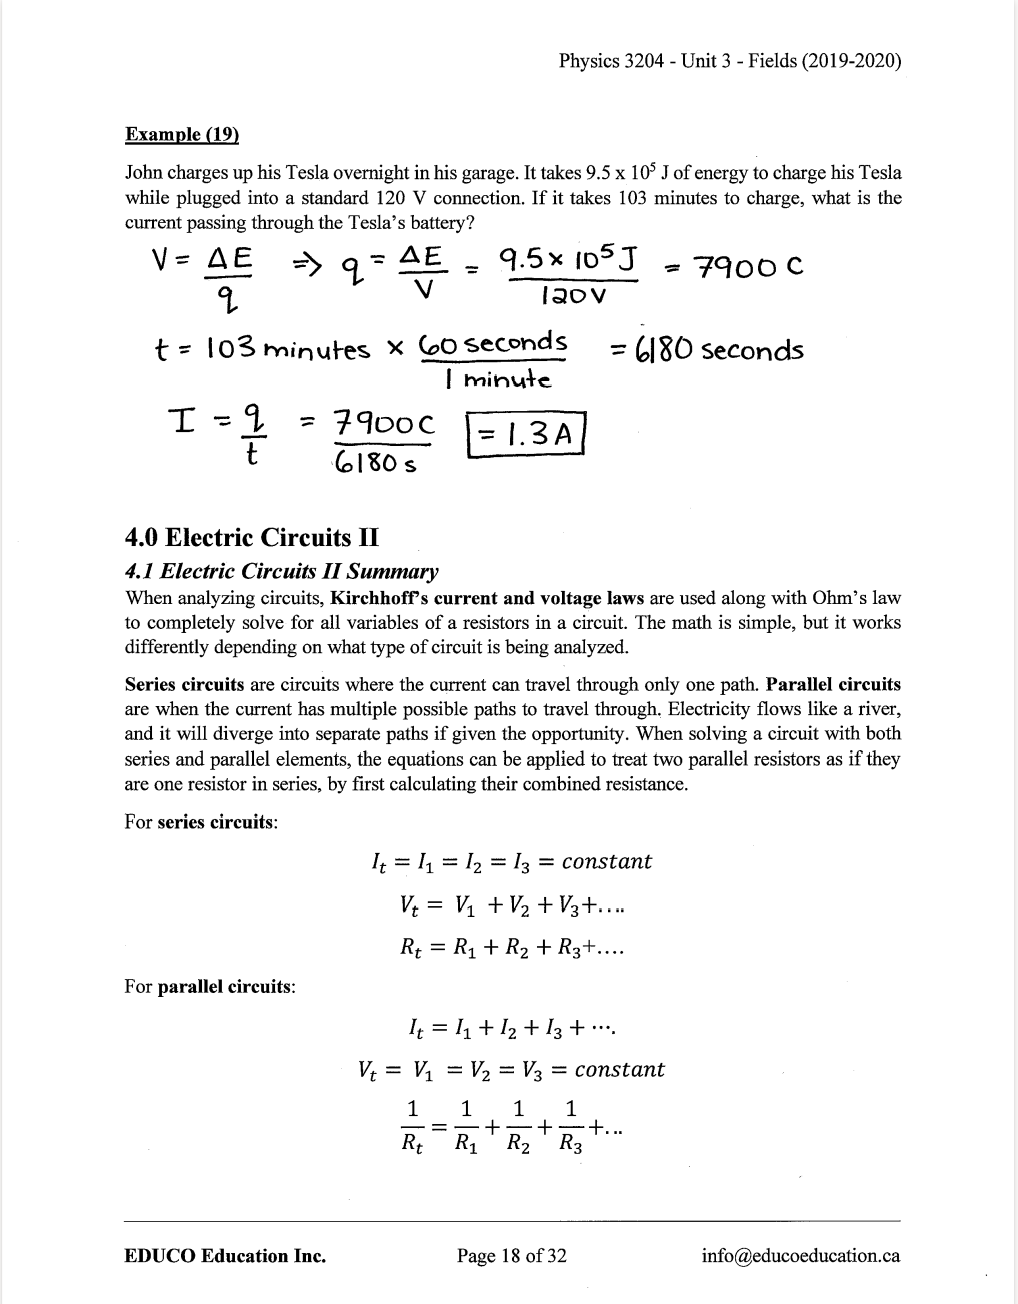 Unit 3: Fields - Physics 3204 (Digital Download)